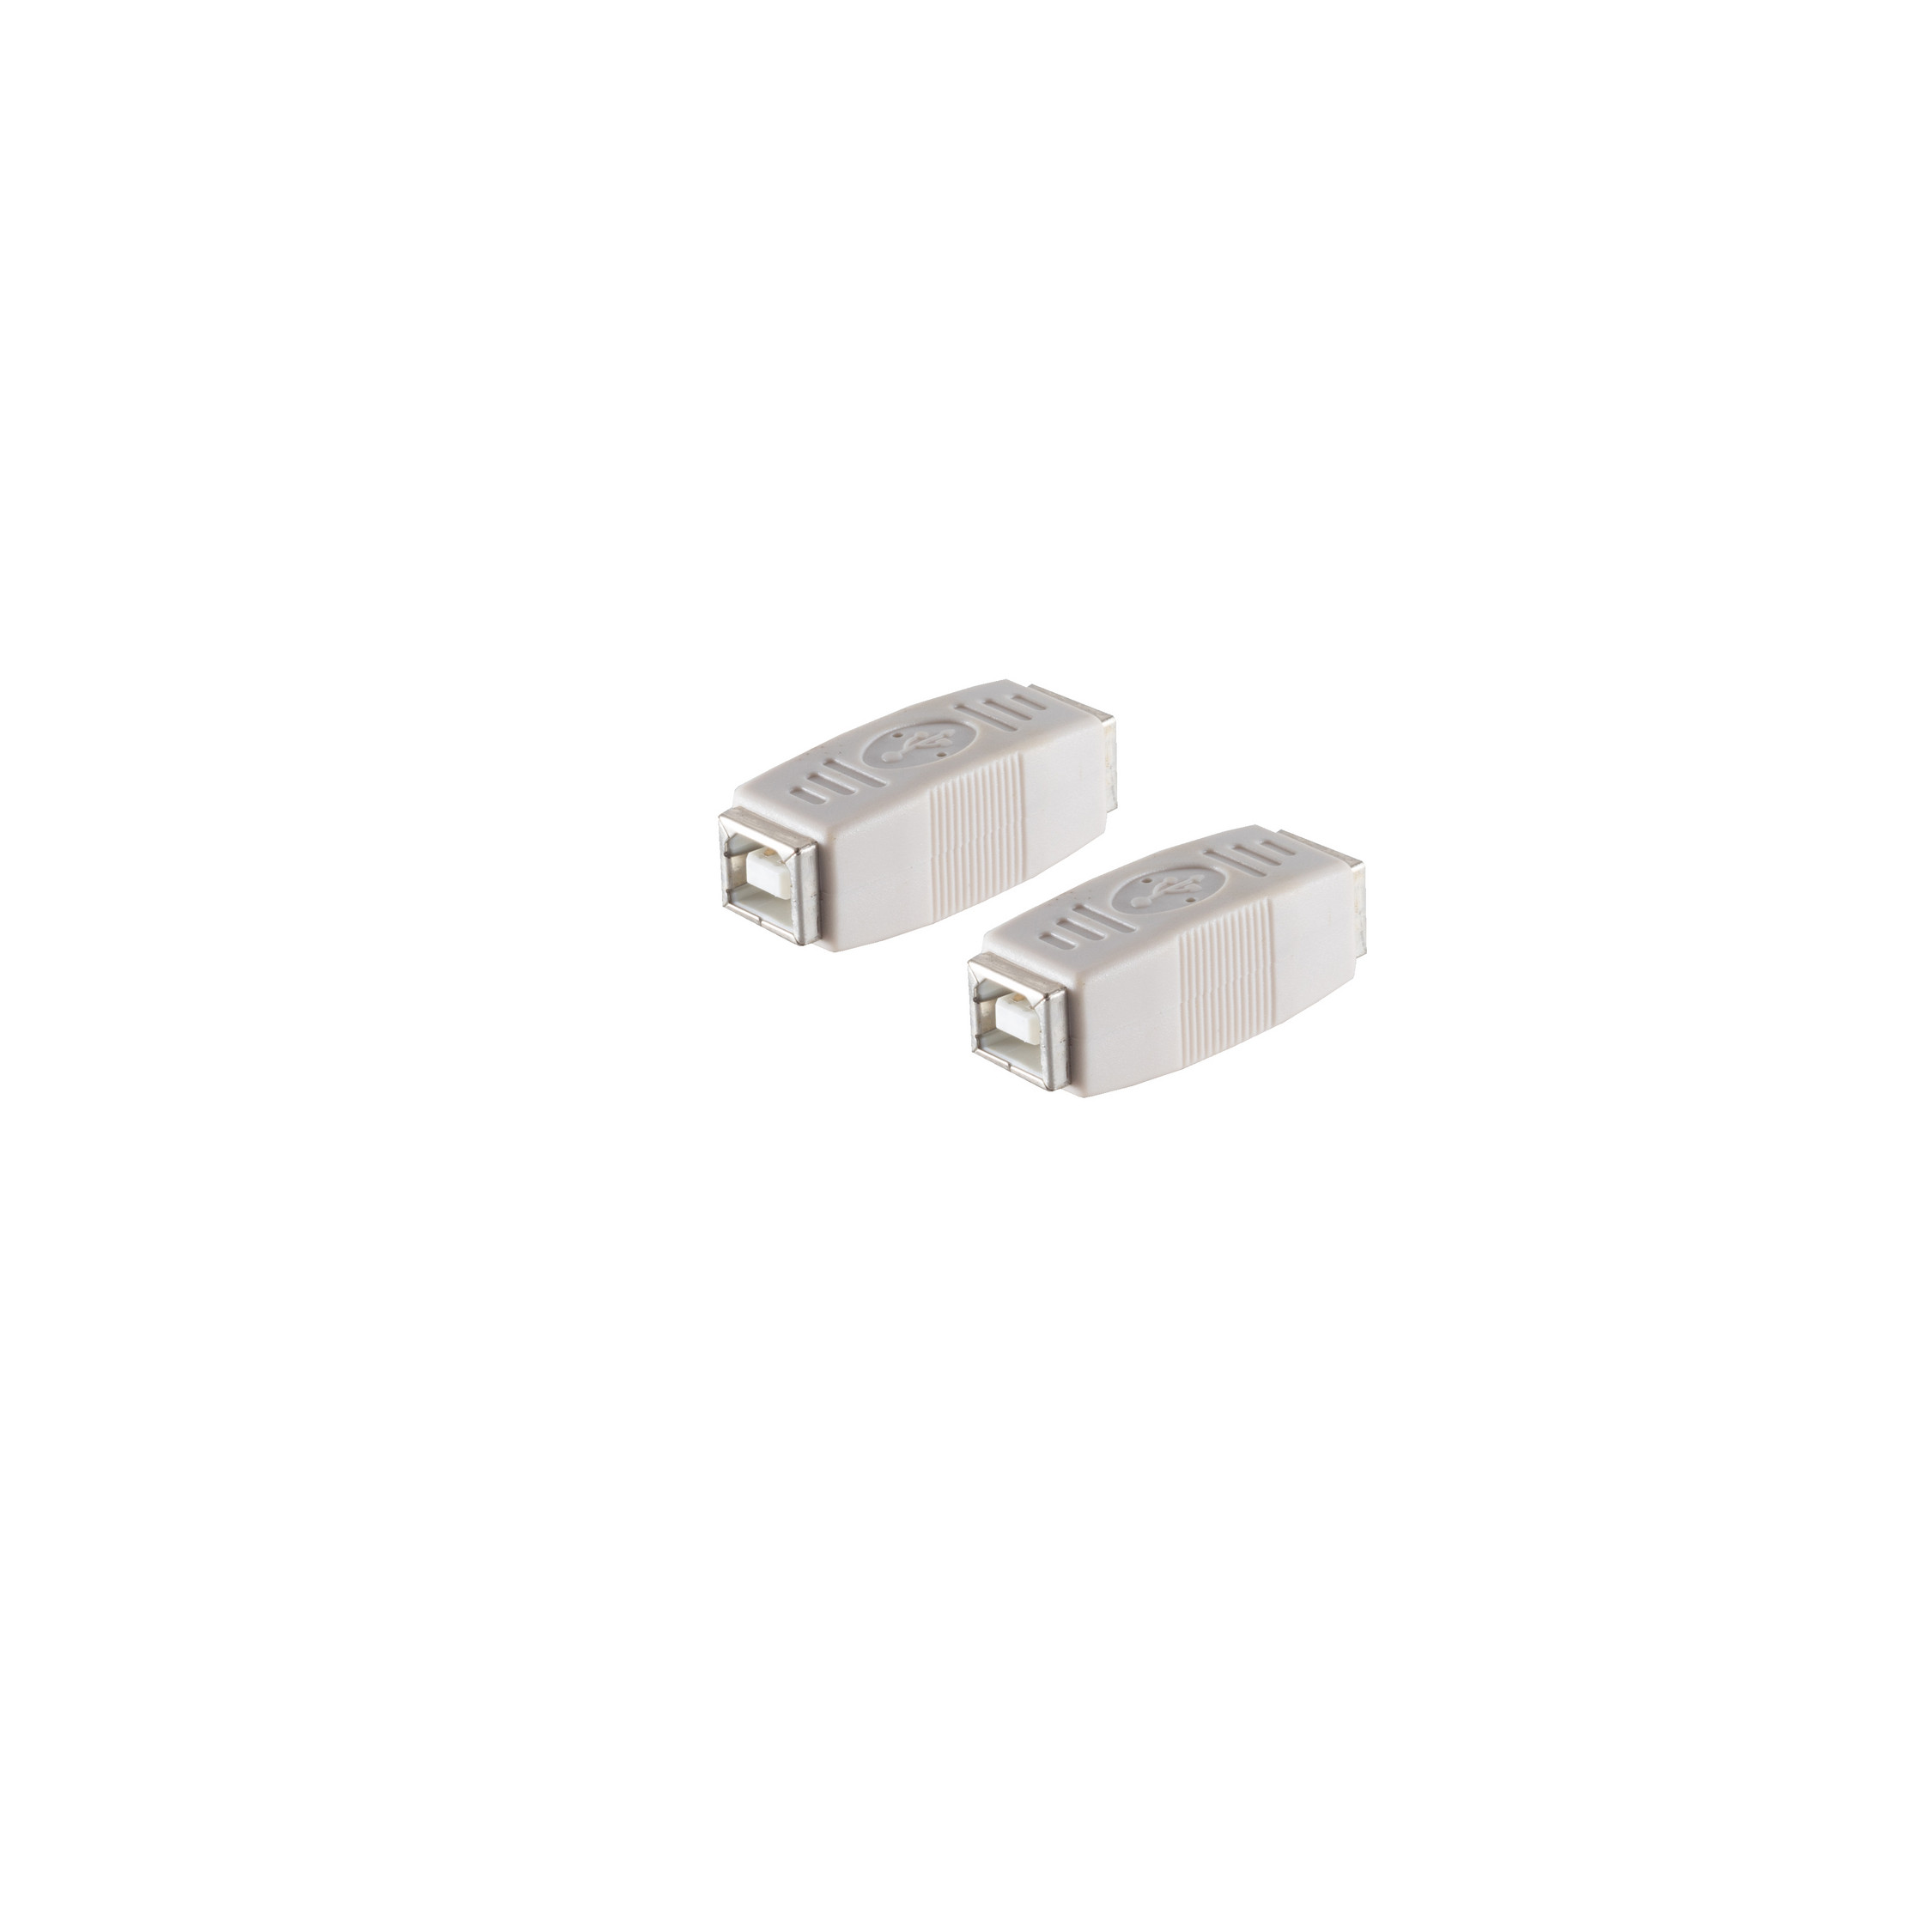 B USB SHIVERPEAKS grau B 2.0 / USB Kupplung Adapter, Adapter Kupplung